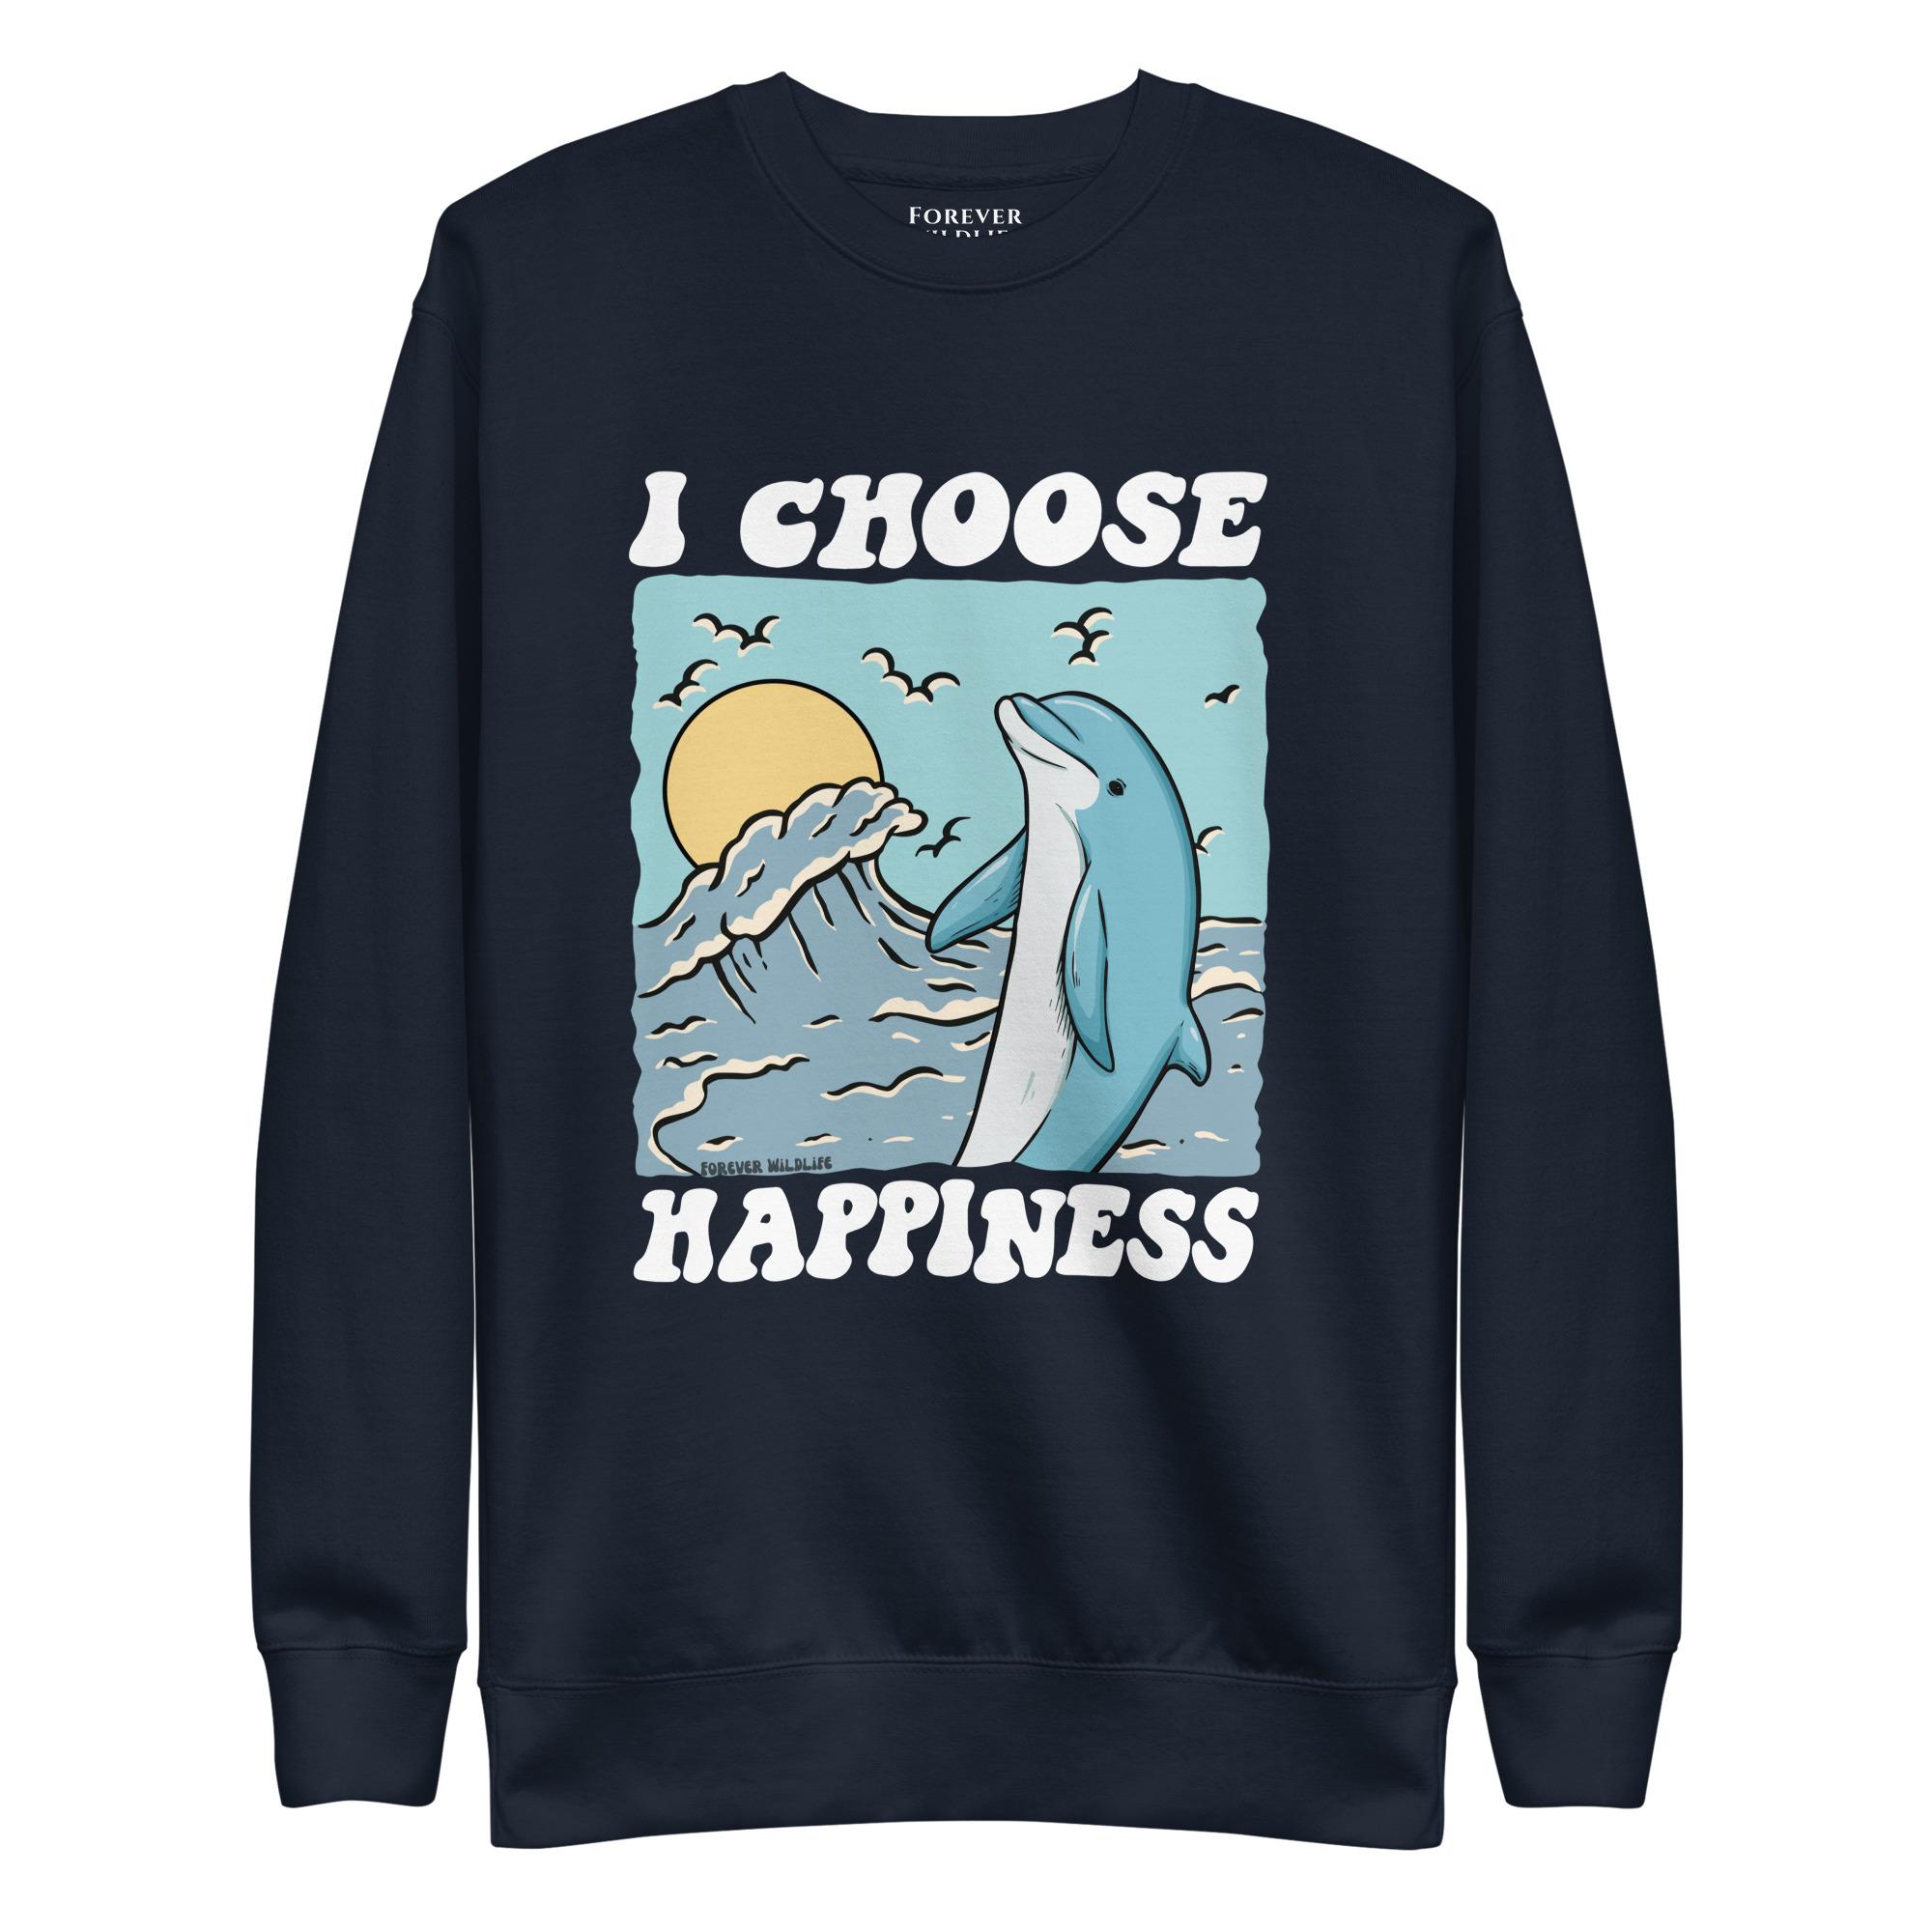 Dolphin Sweatshirt in Navy-Premium Wildlife Animal Inspiration Sweatshirt Design with 'I Choose Happiness' text, part of Wildlife Sweatshirts & Clothing from Forever Wildlife.